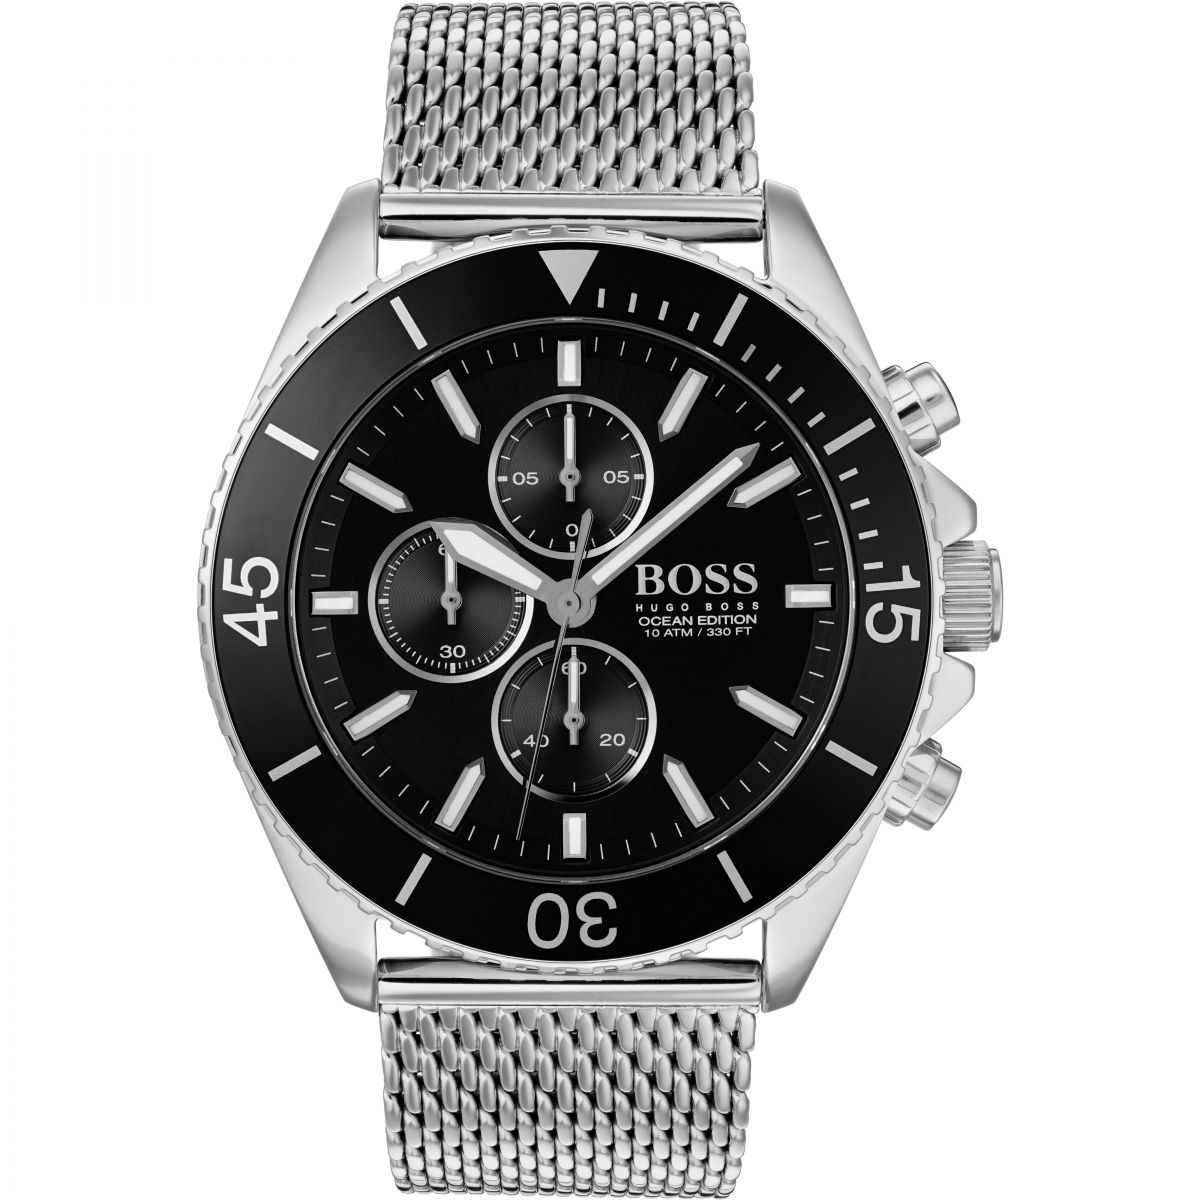 Hugo Boss Ocean Edition Chronograph Black Dial Men's Watch 1513701 Water resistance: 100 meters / 330 feet Movement: Quartz 